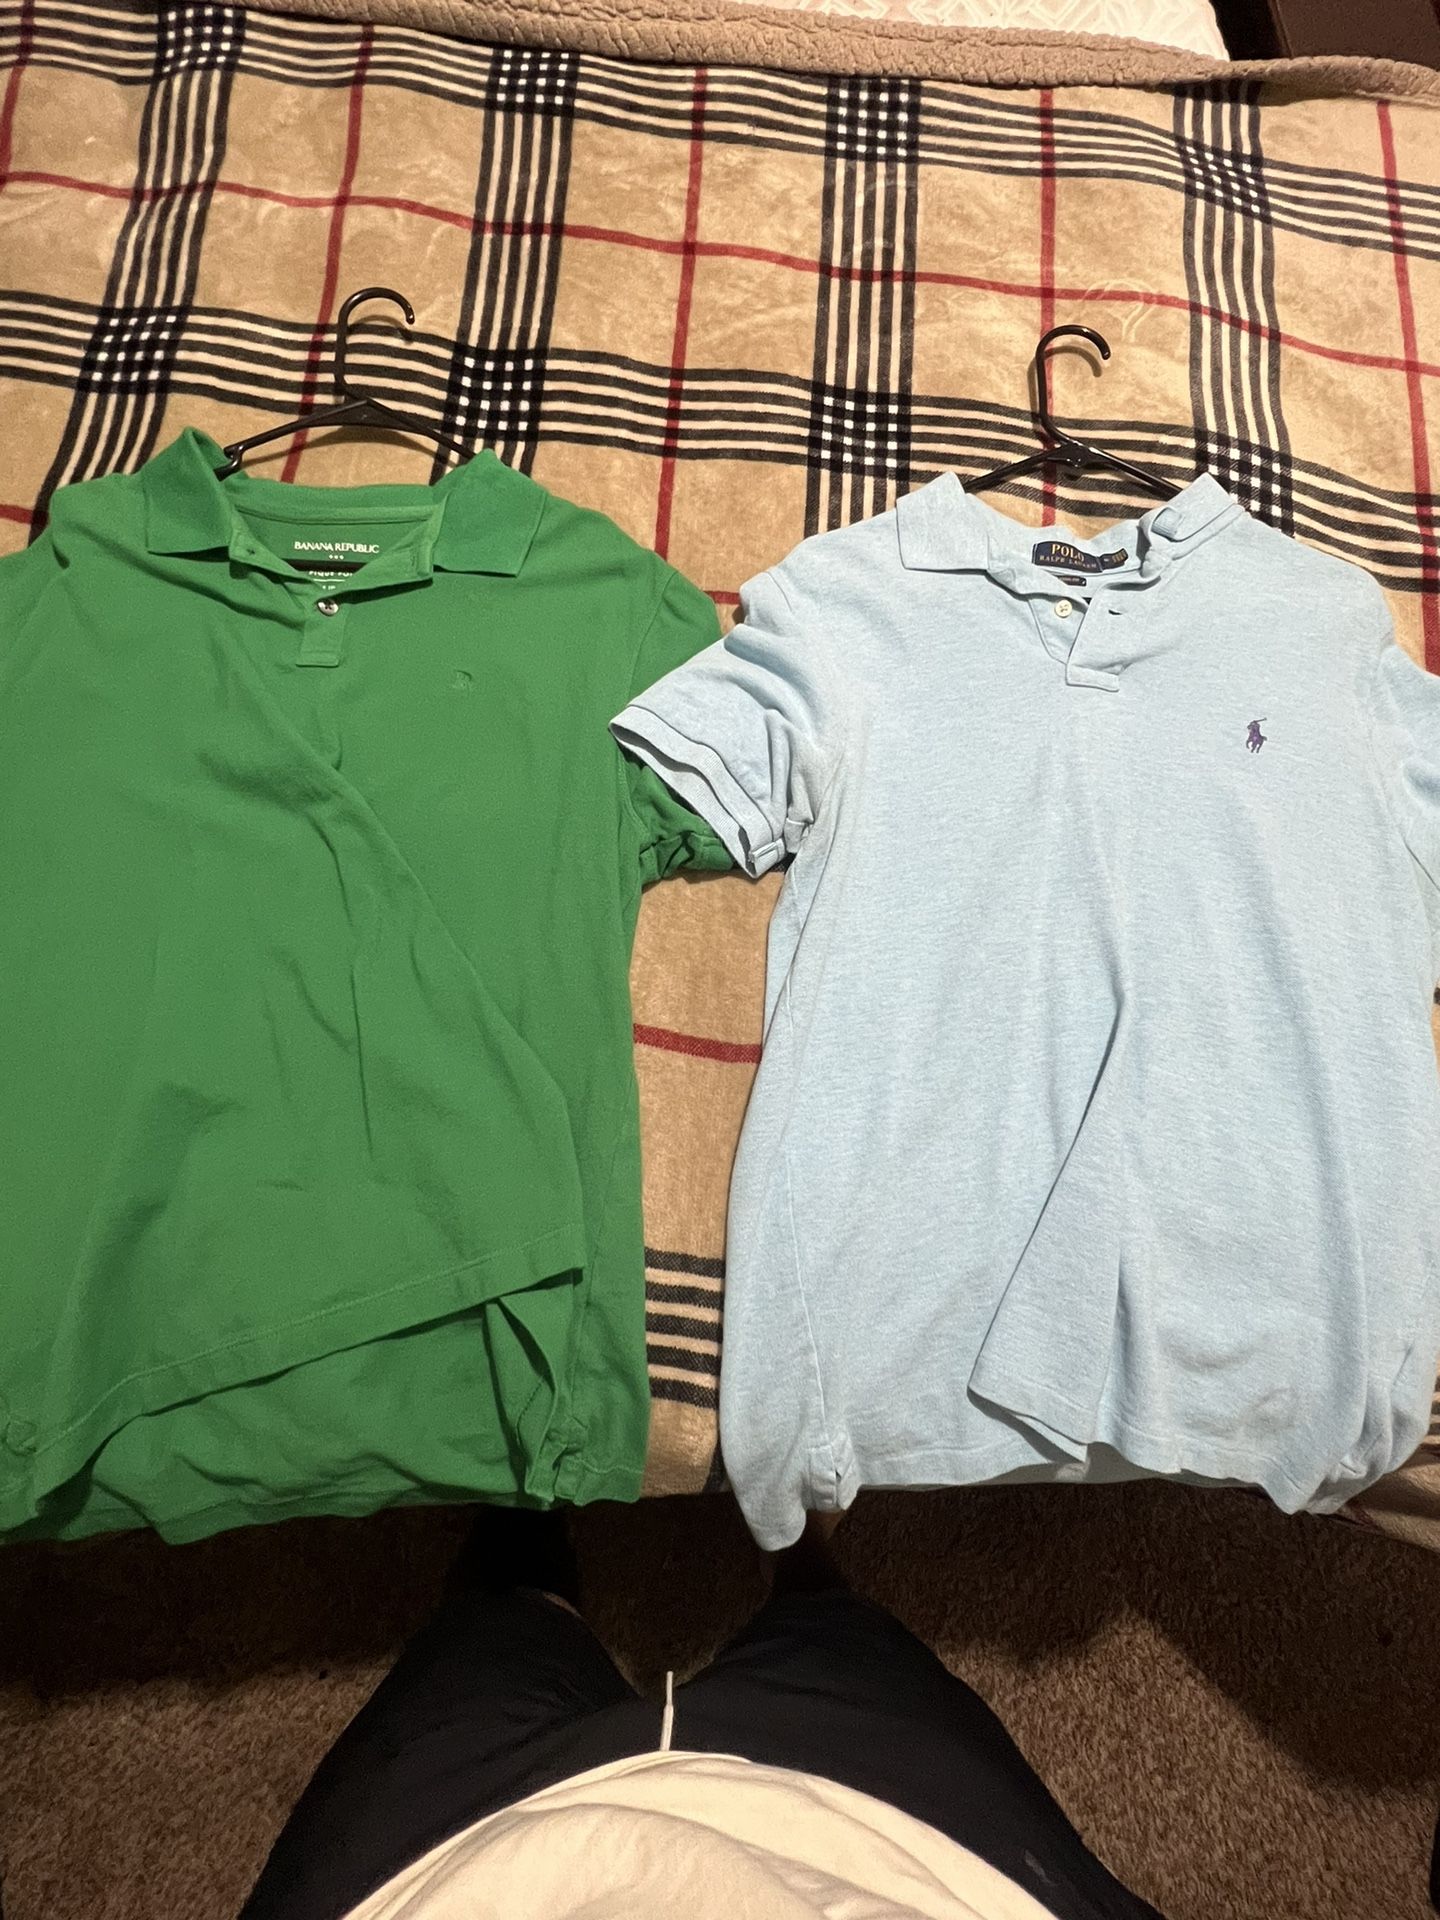 Men’s Dress Shirts 